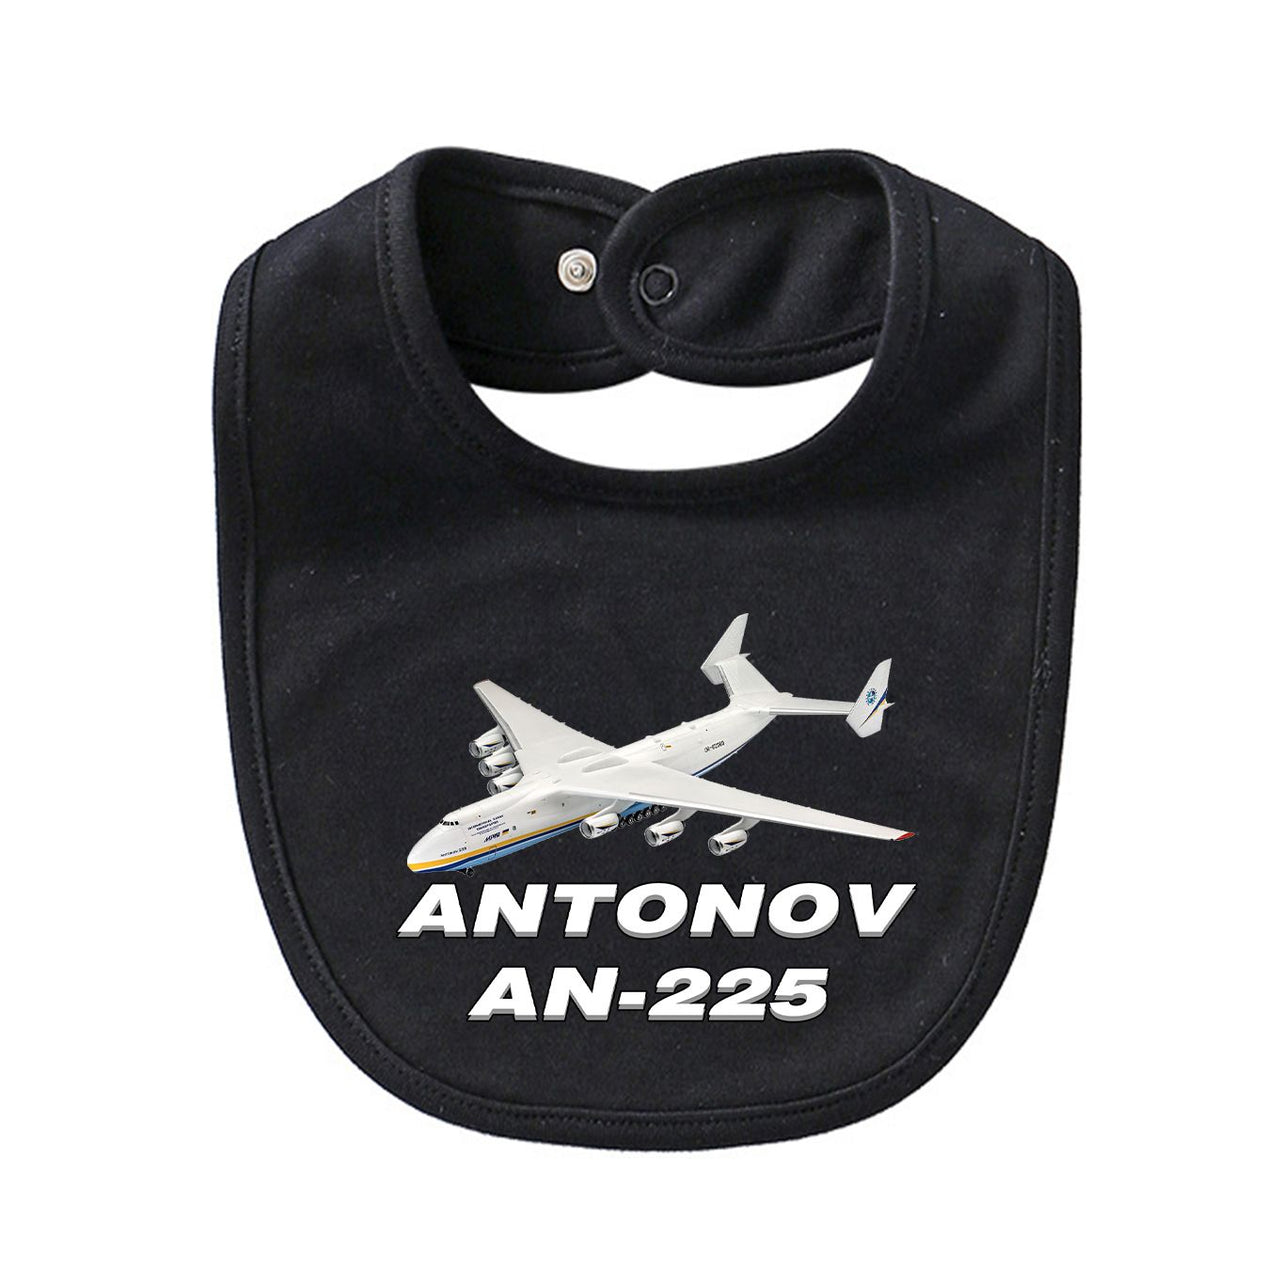 Antonov AN-225 (12) Designed Baby Saliva & Feeding Towels